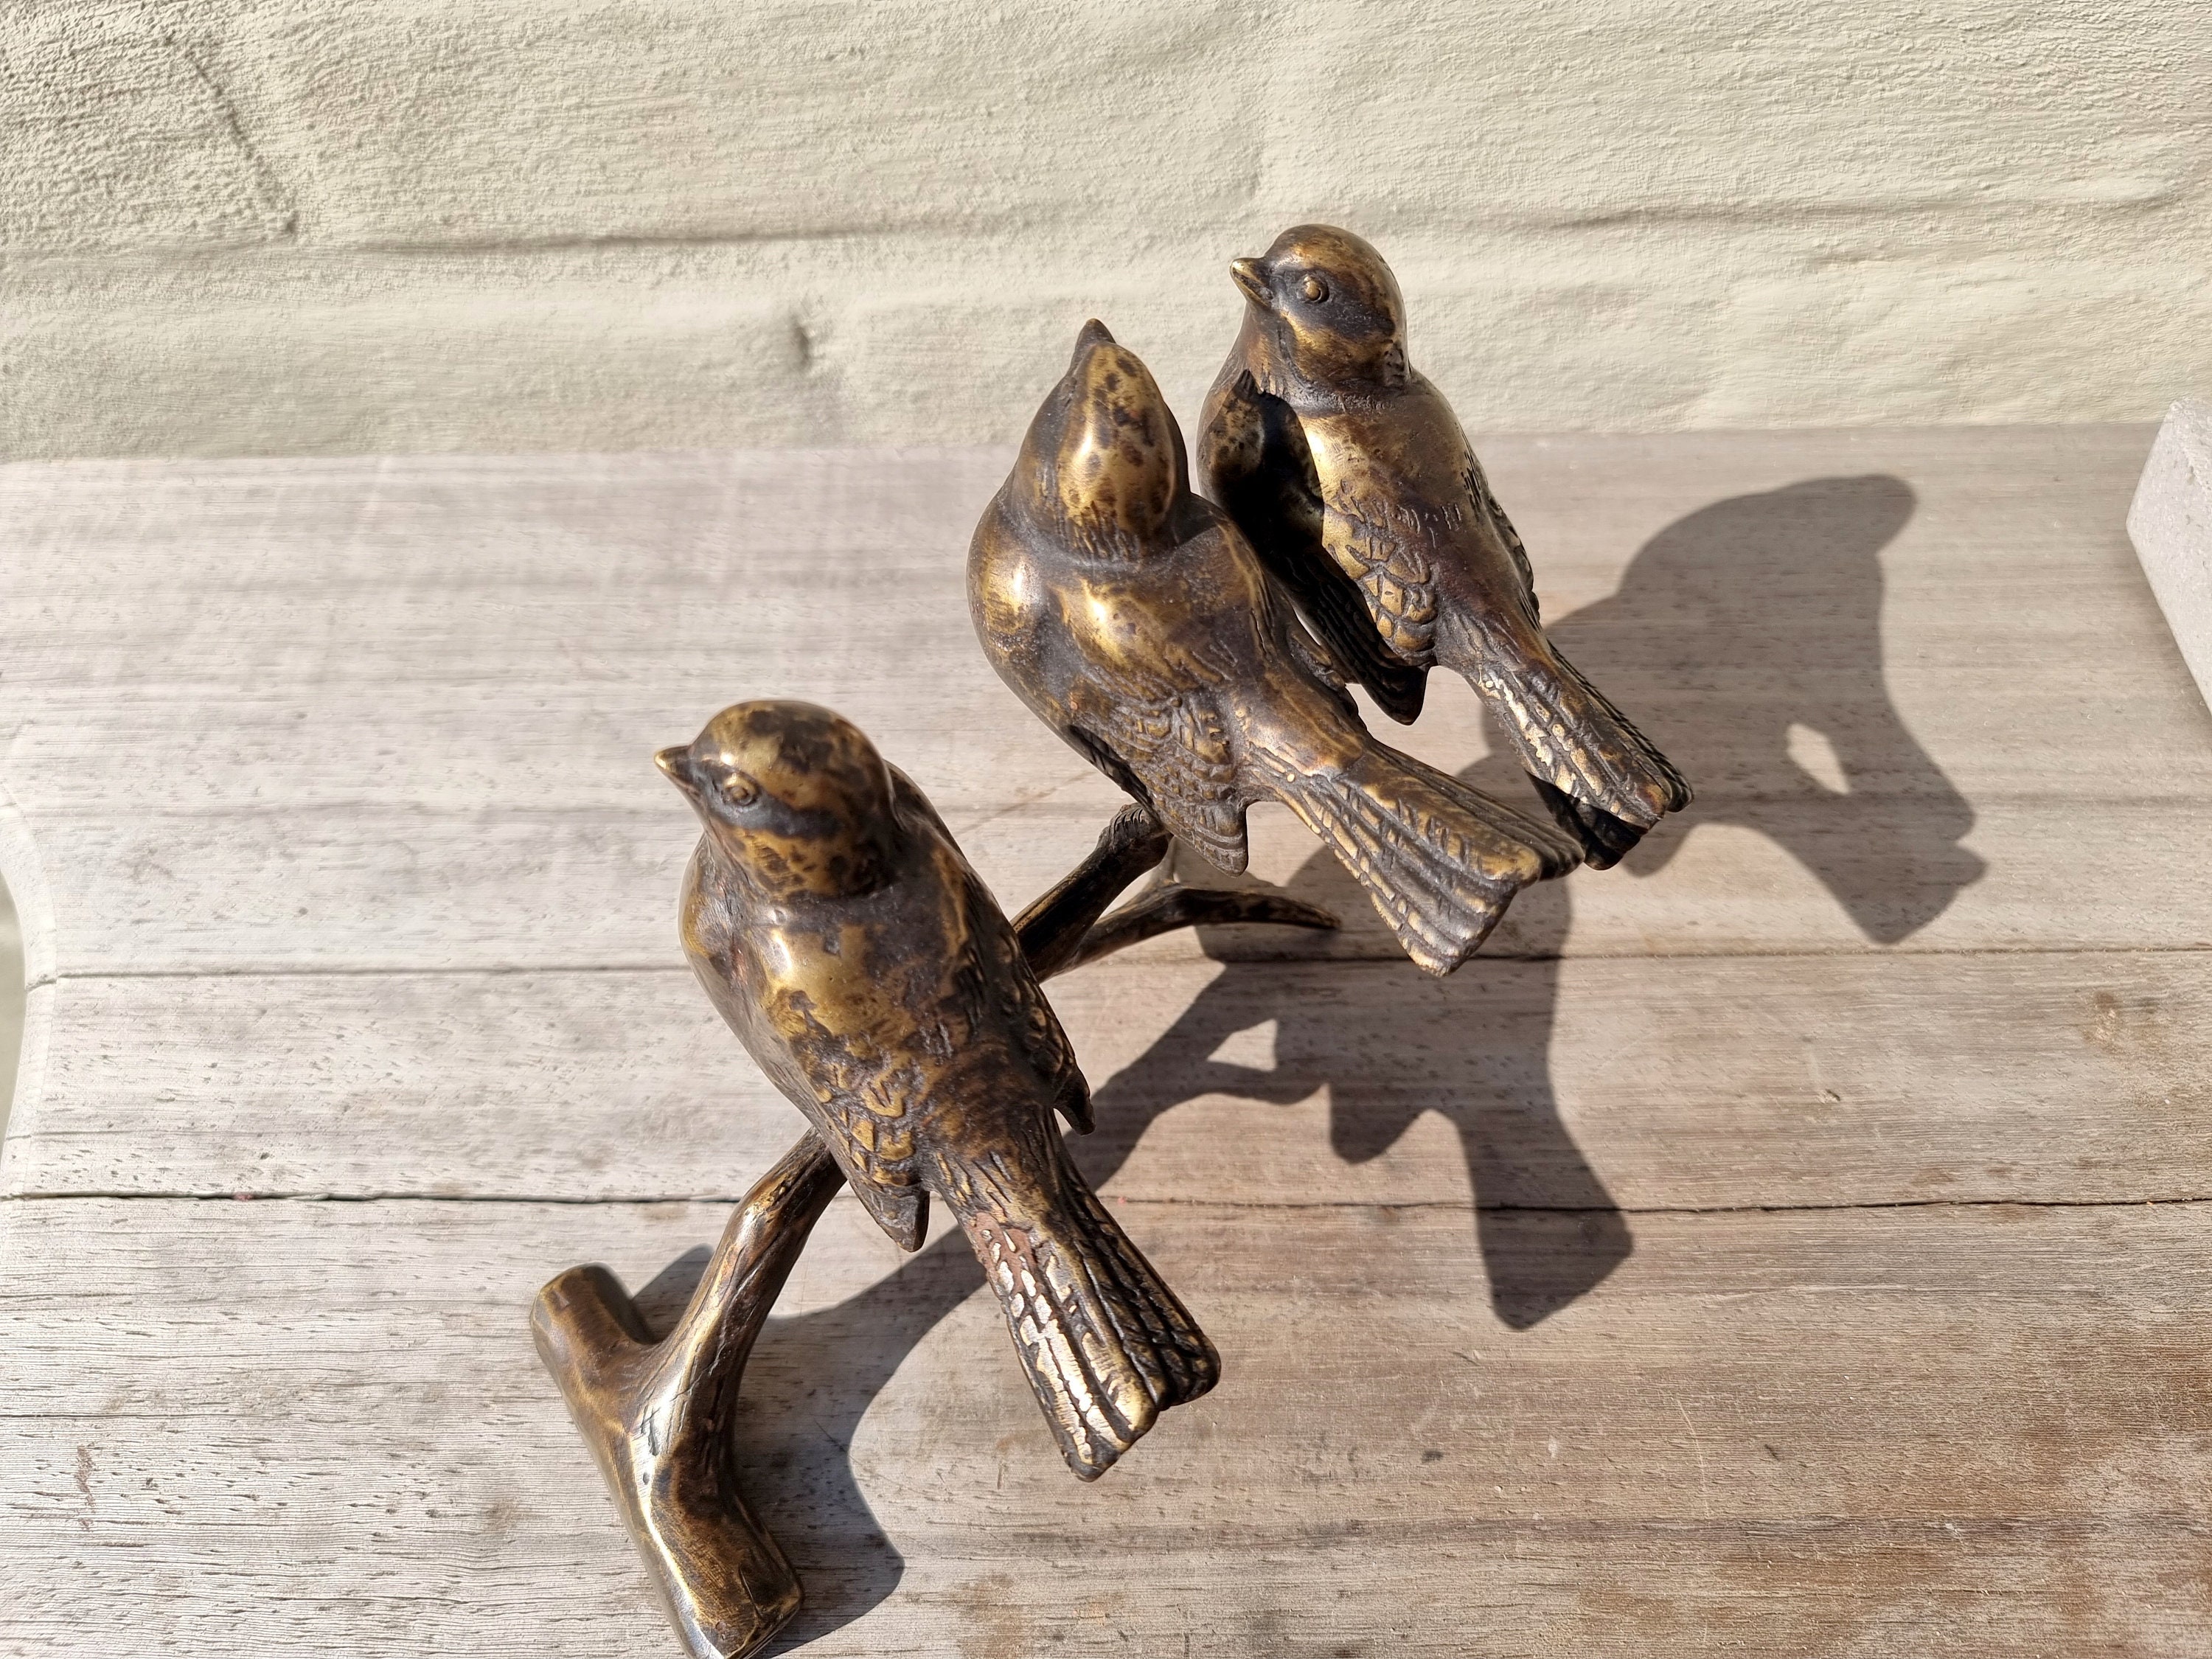 Figuras de pájaros dorados para decoración del hogar, estatua de gorrión,  detalles de decoración dorados, pájaros decorativos dorados para decoración